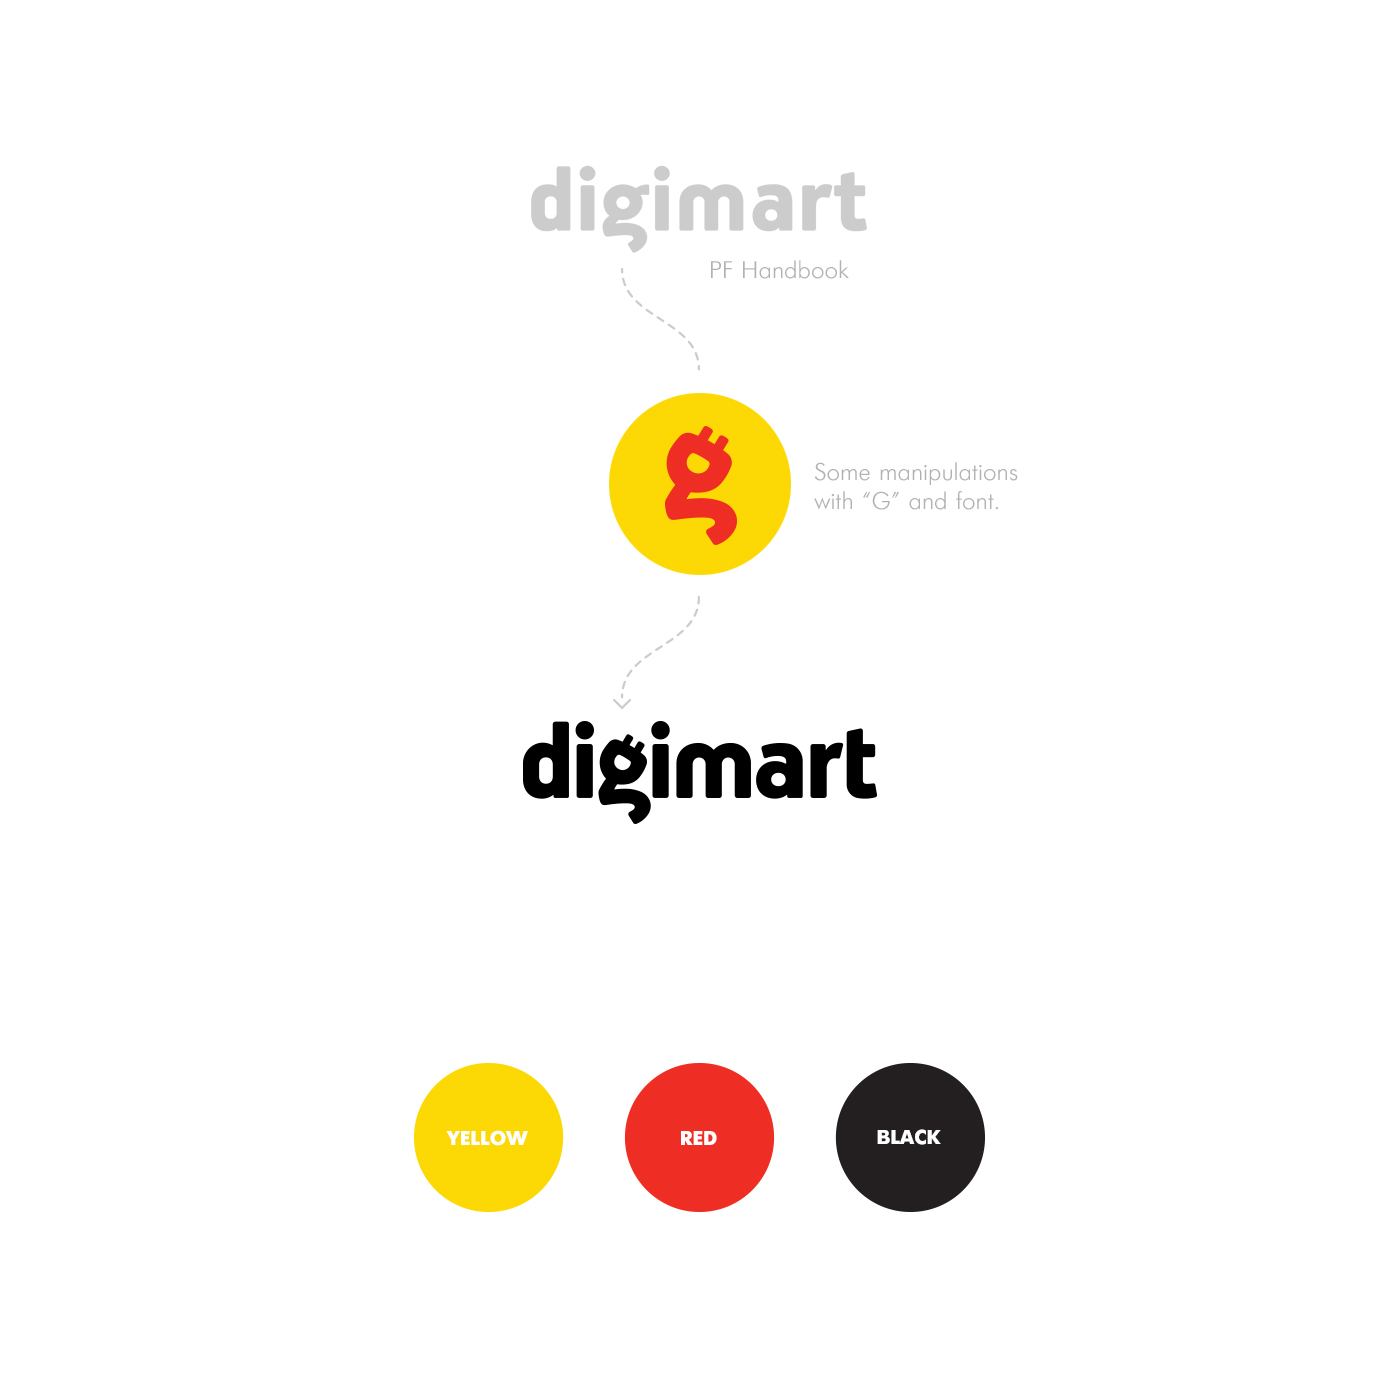 digimart logo Electronics store branding 